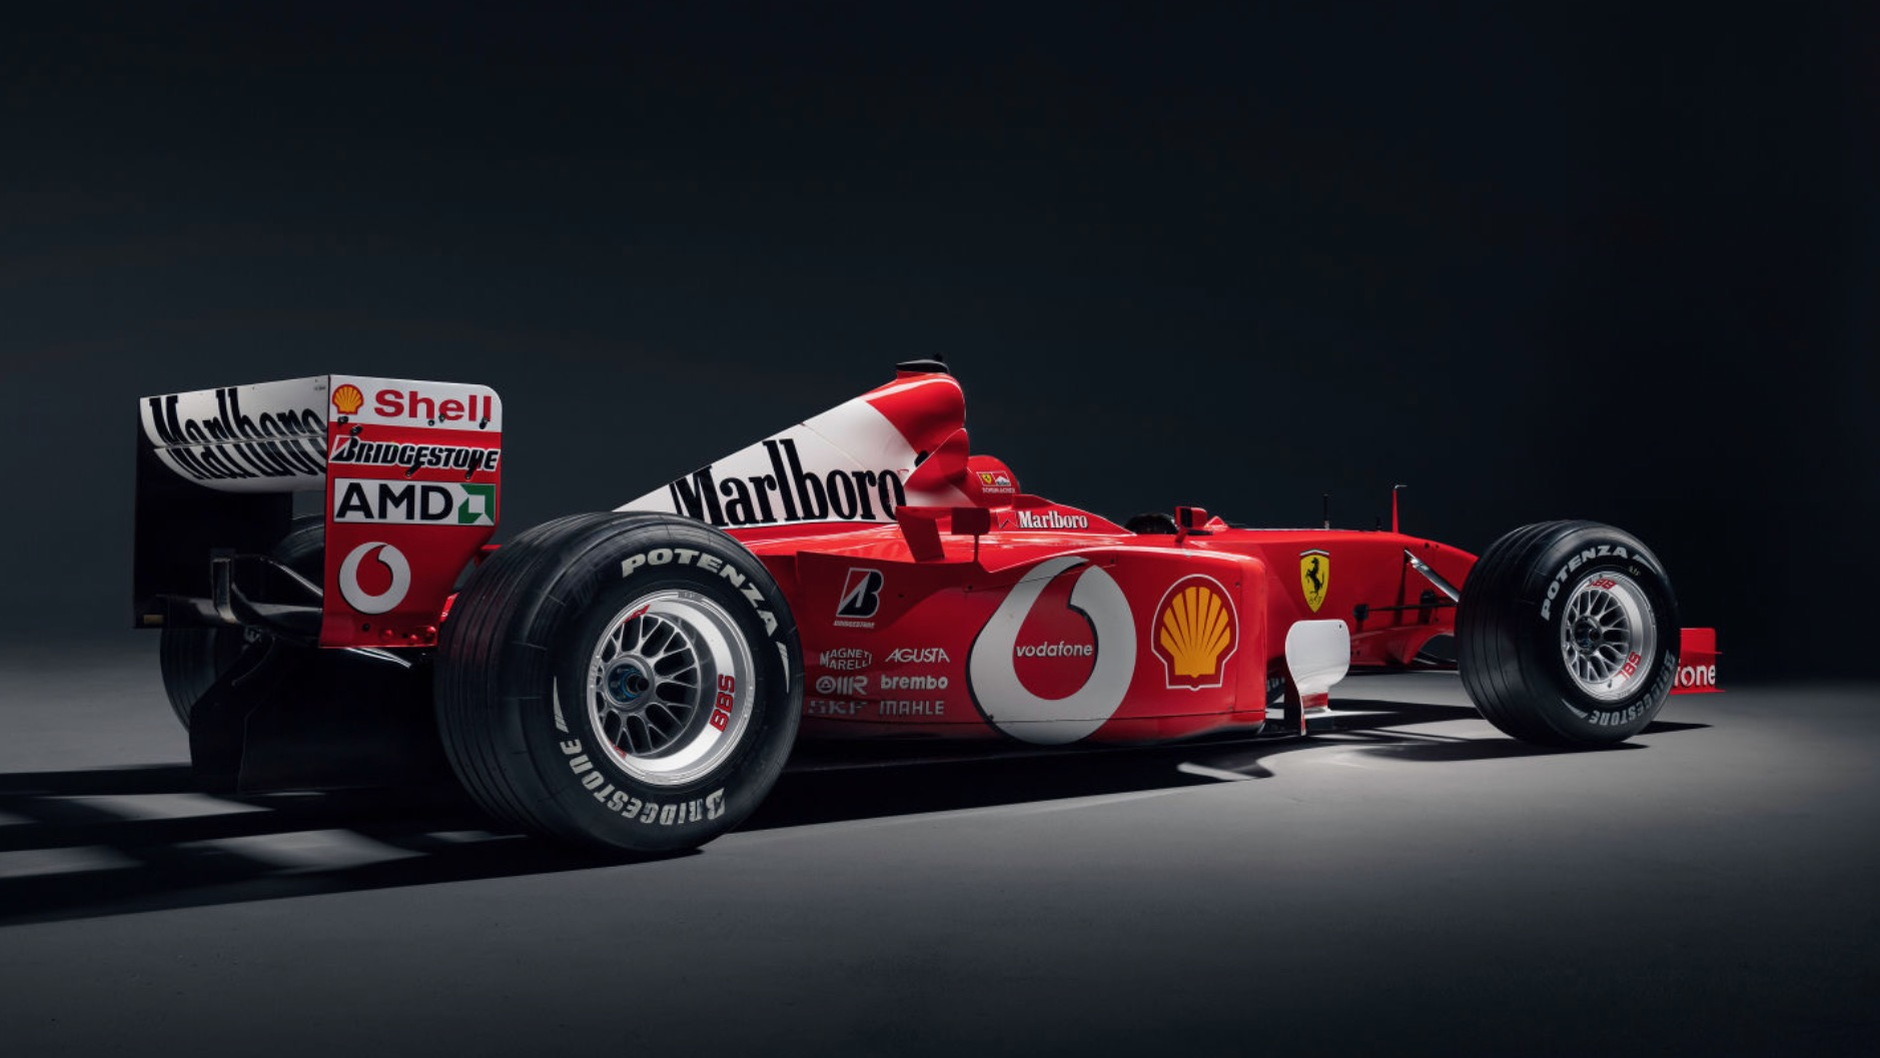 Ferrari F2001b driven by Michael Schumacher (photo via RM Sotheby's)